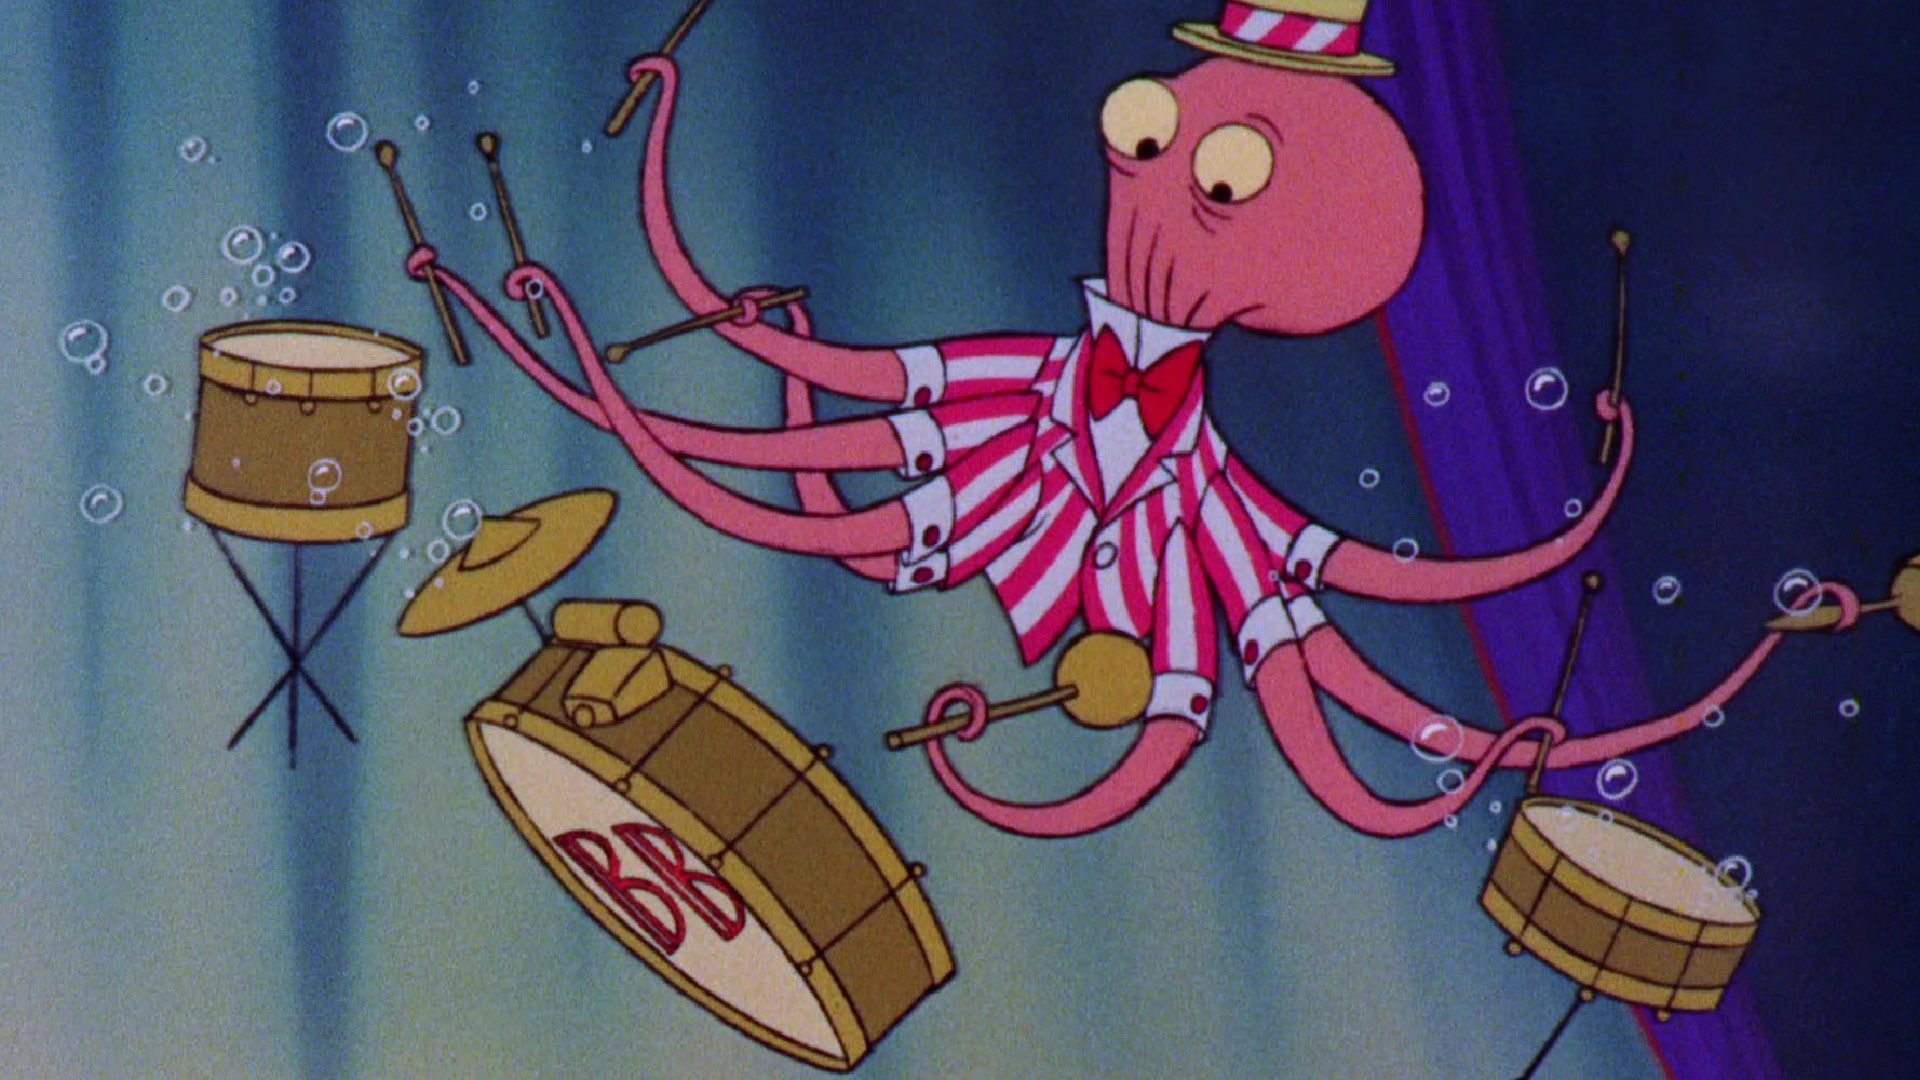 BEDKNOBS AND BROOMSTICKS film still of a cartoon octopus